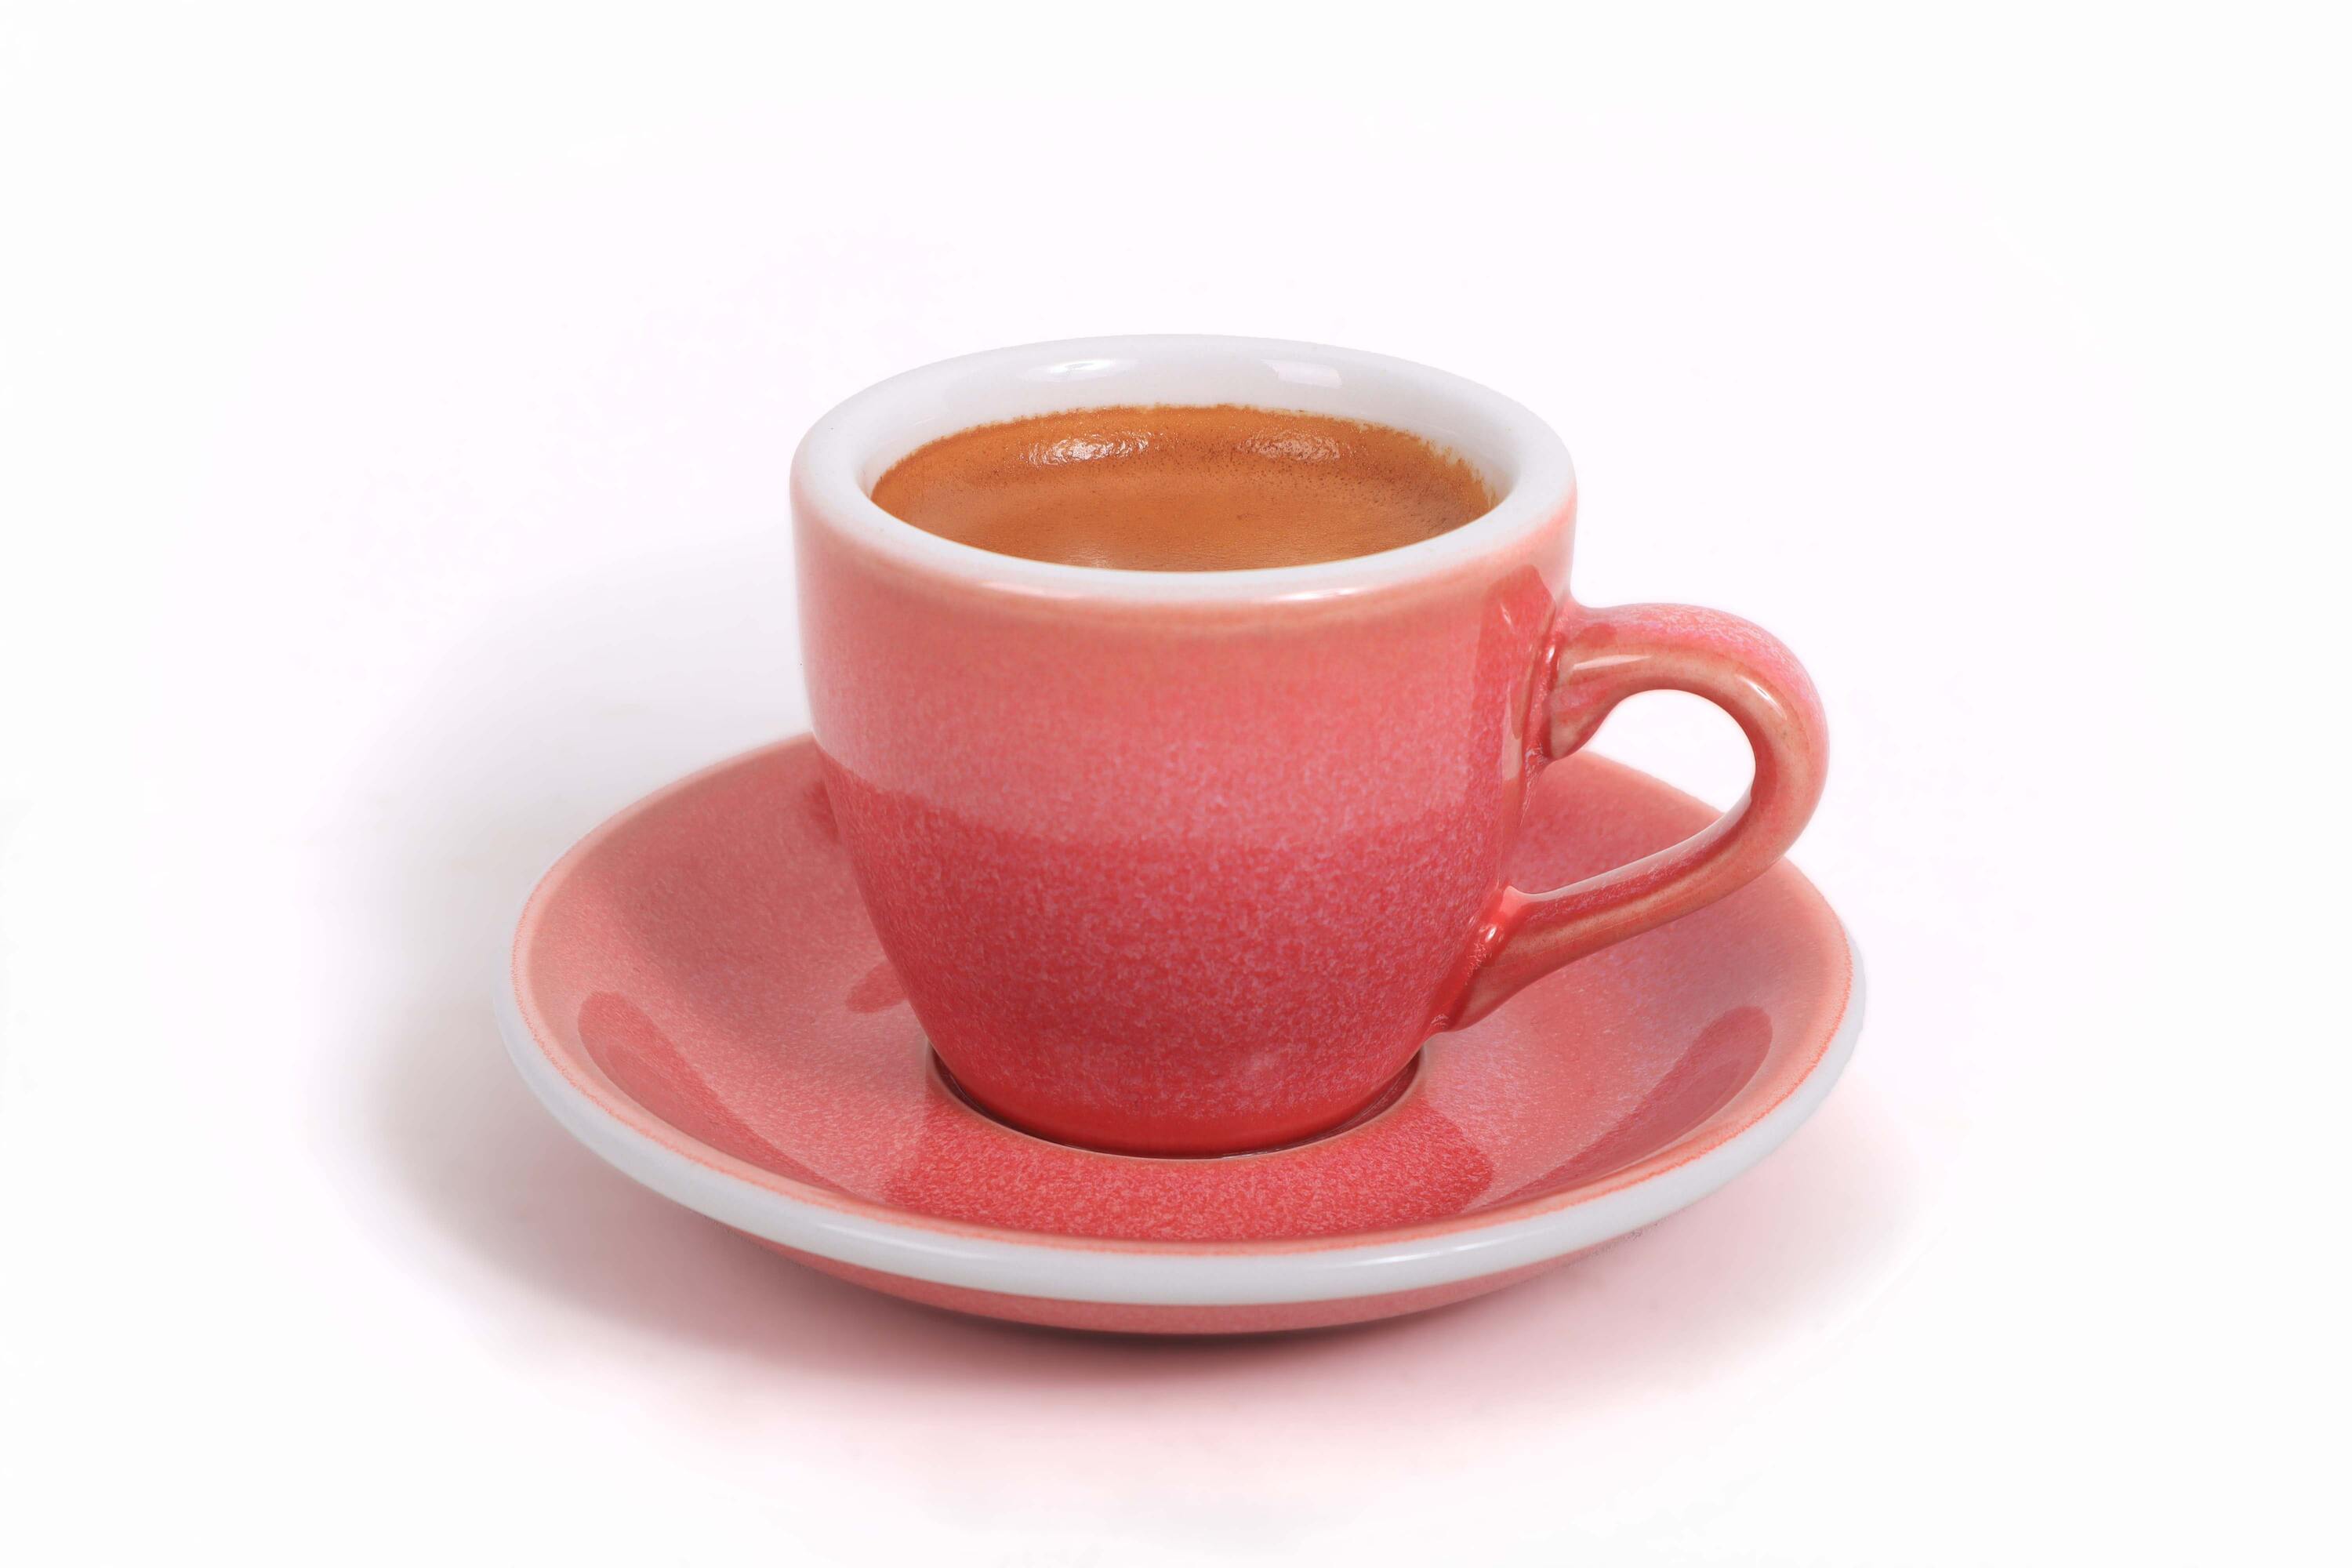 4oz. Espresso Cups Set of 4 With Matching Saucers - Premium Porcelain, 8  Piece Gift Box Demitasse Set - Red, Blue & Grey – Italian Caffè Mugs,  Turkish